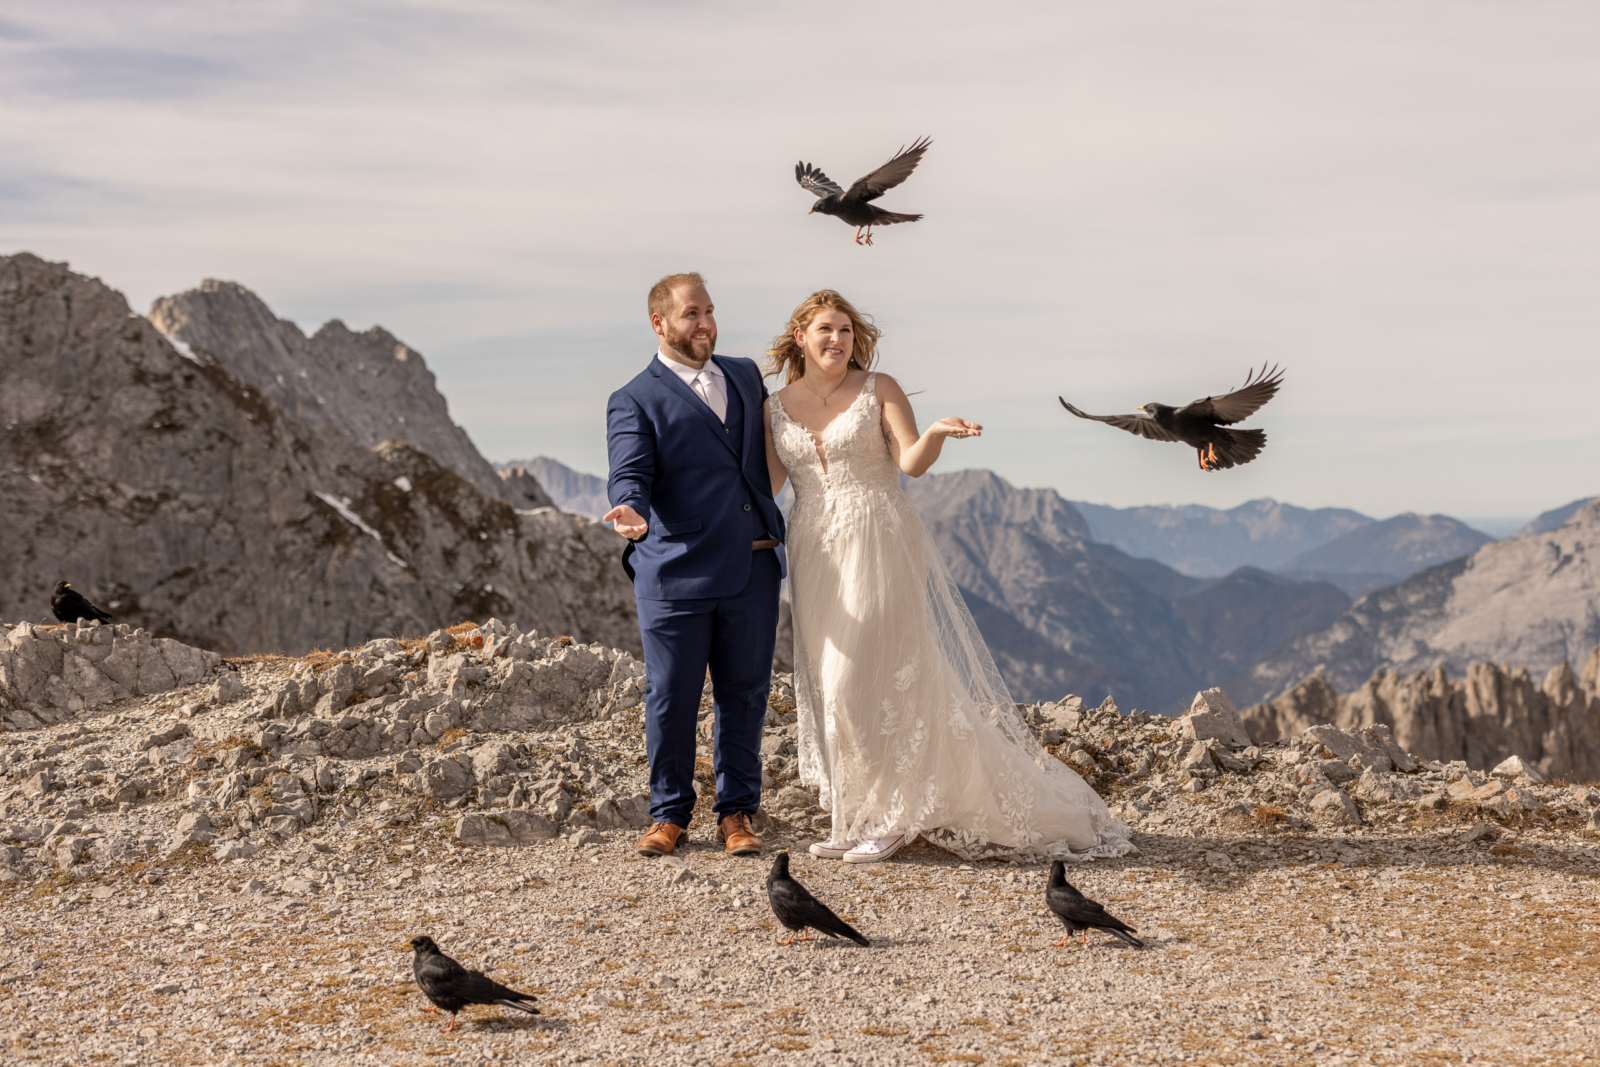 Alpine Birds surprise the couple for their mountain wedding in Austria